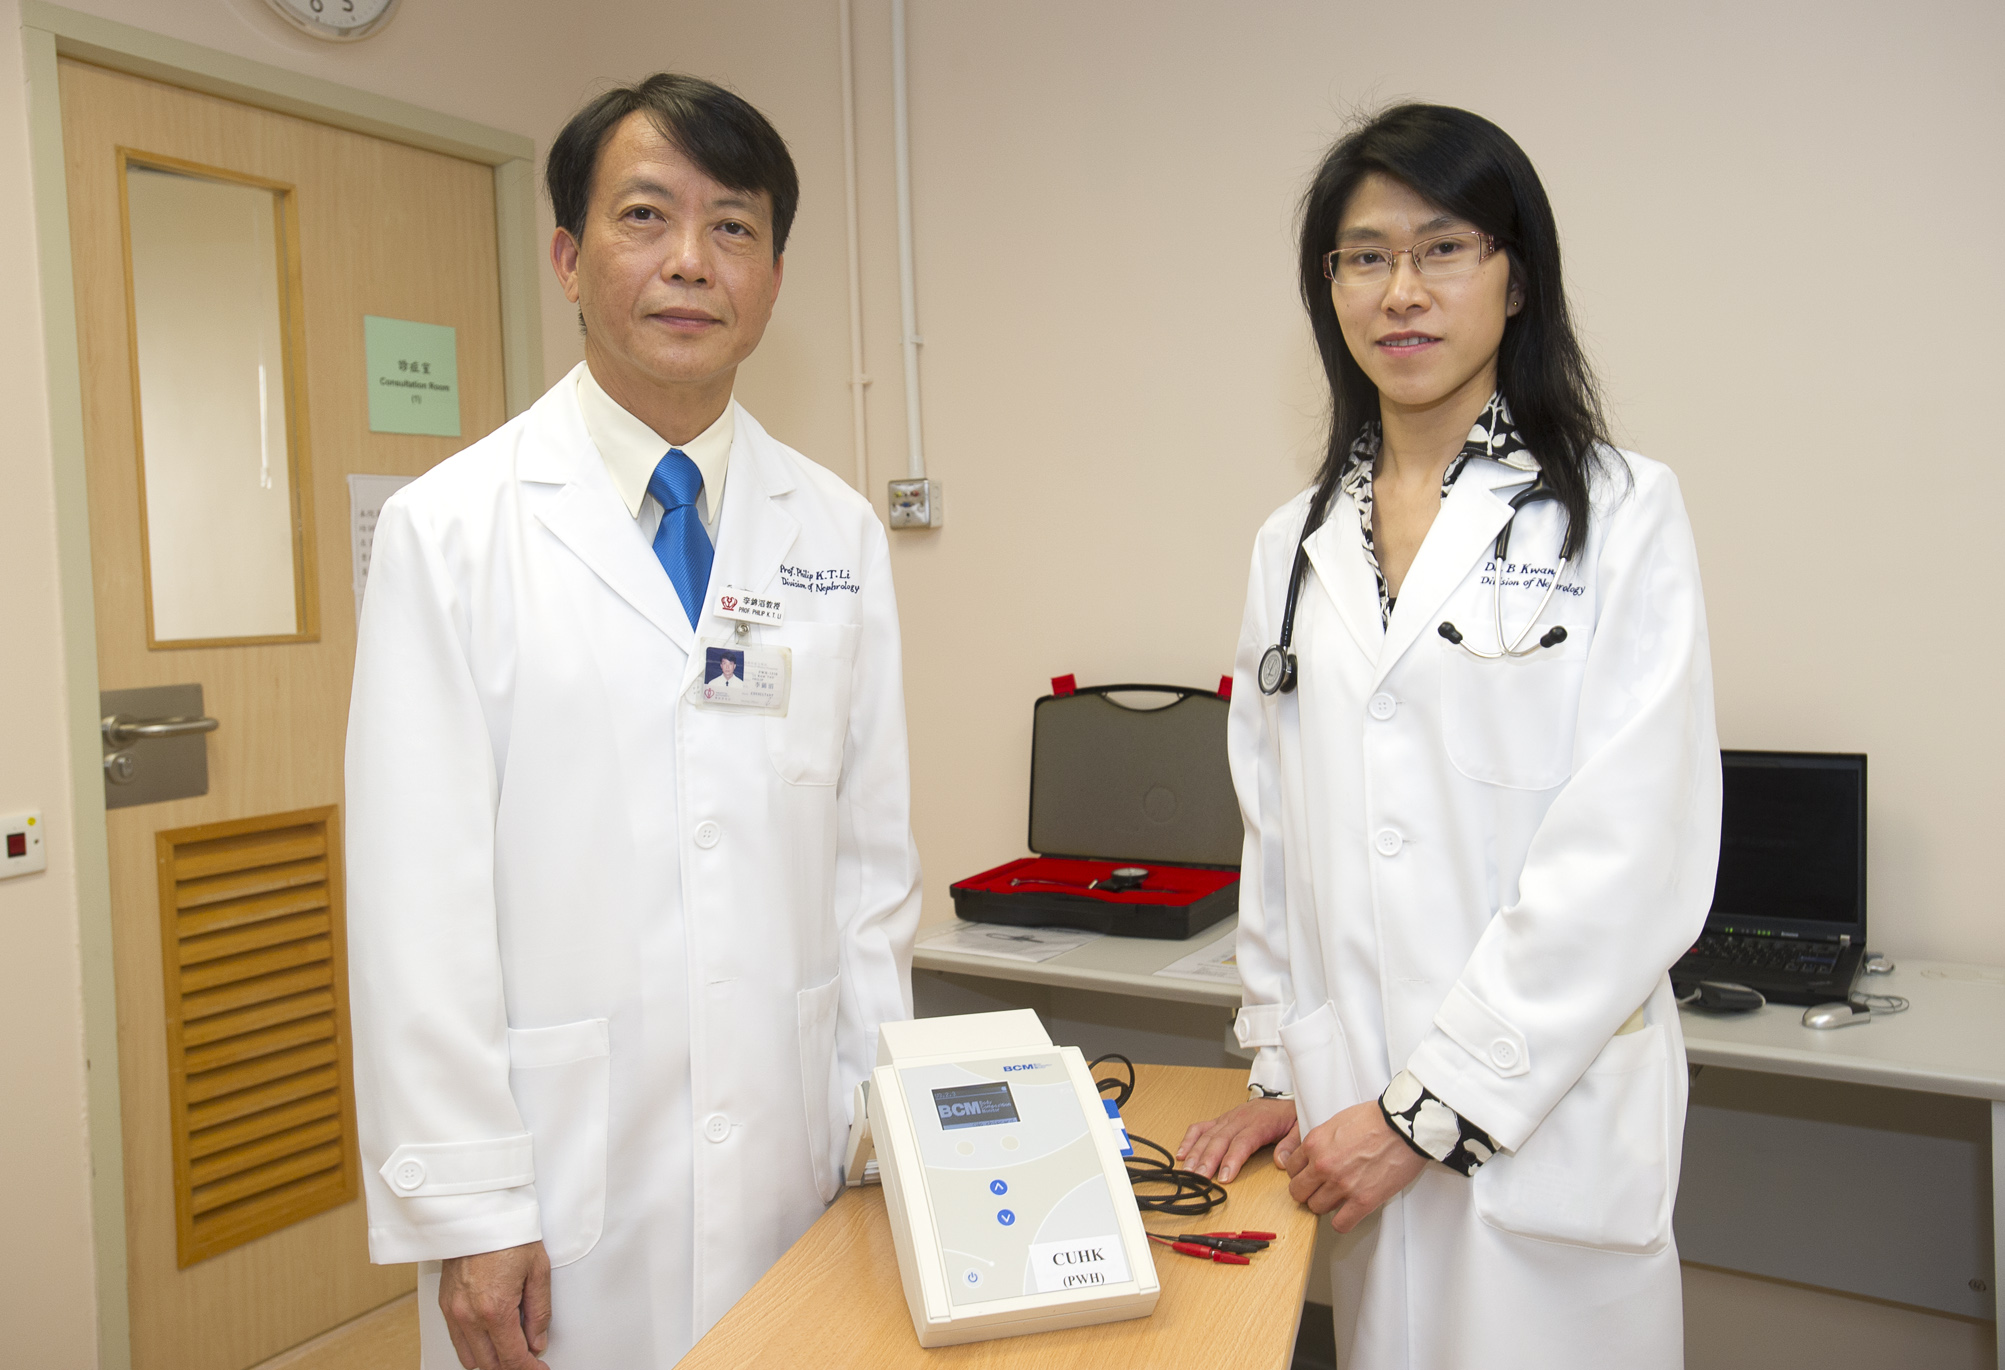 Professor Li and Professor Kwan show the Bioimpedance Spectroscopy